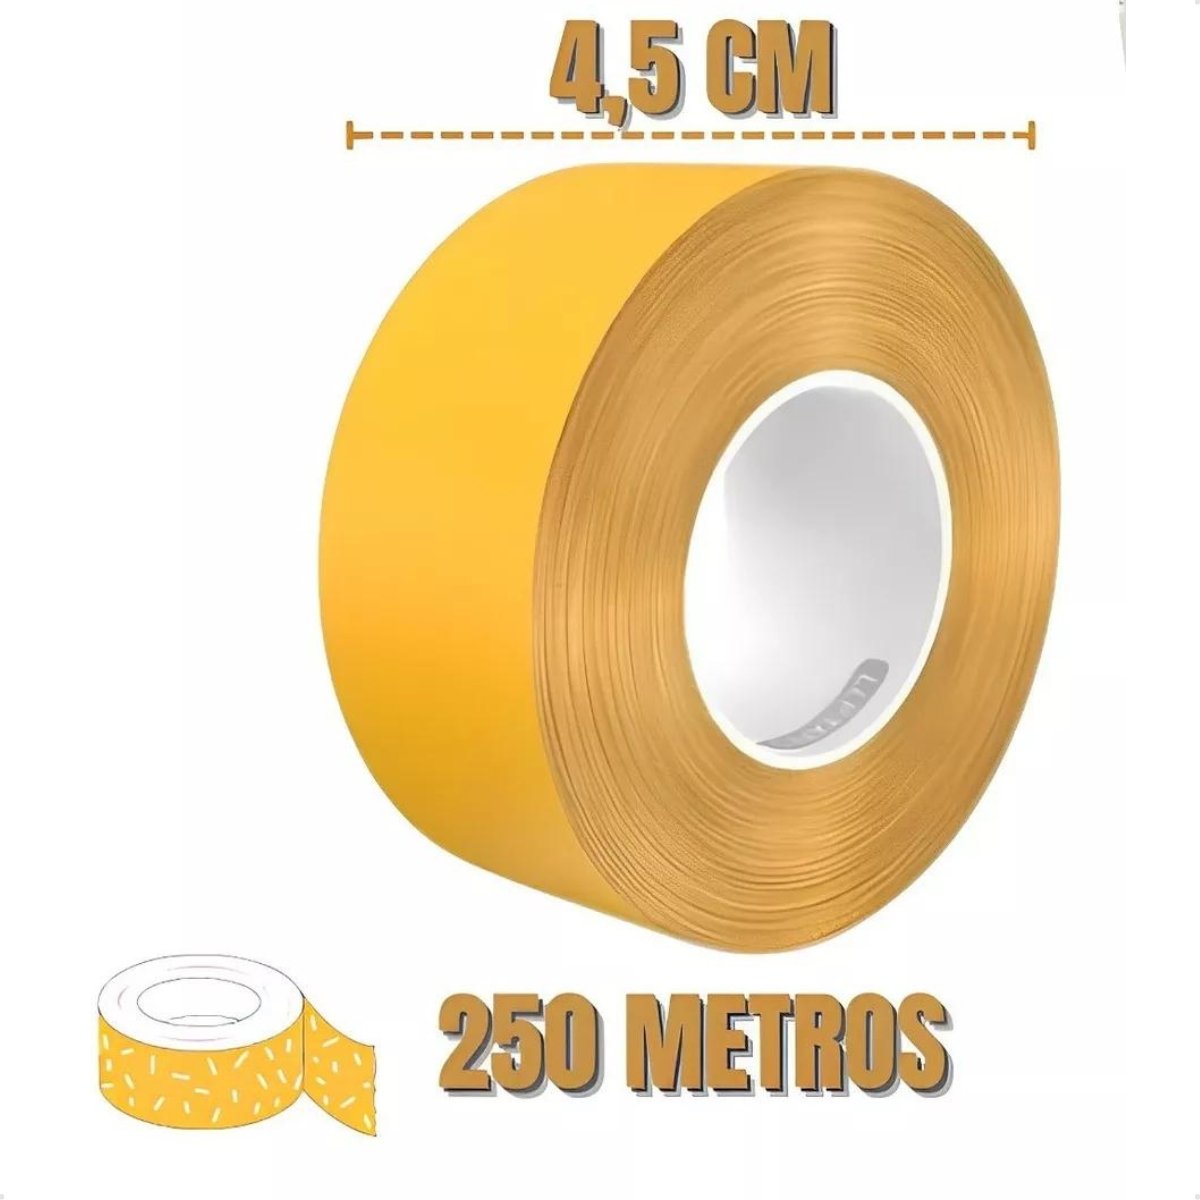 Fita Adesiva Durex para Embalar Larga e Resistente 250 Metros - Marrom - 4